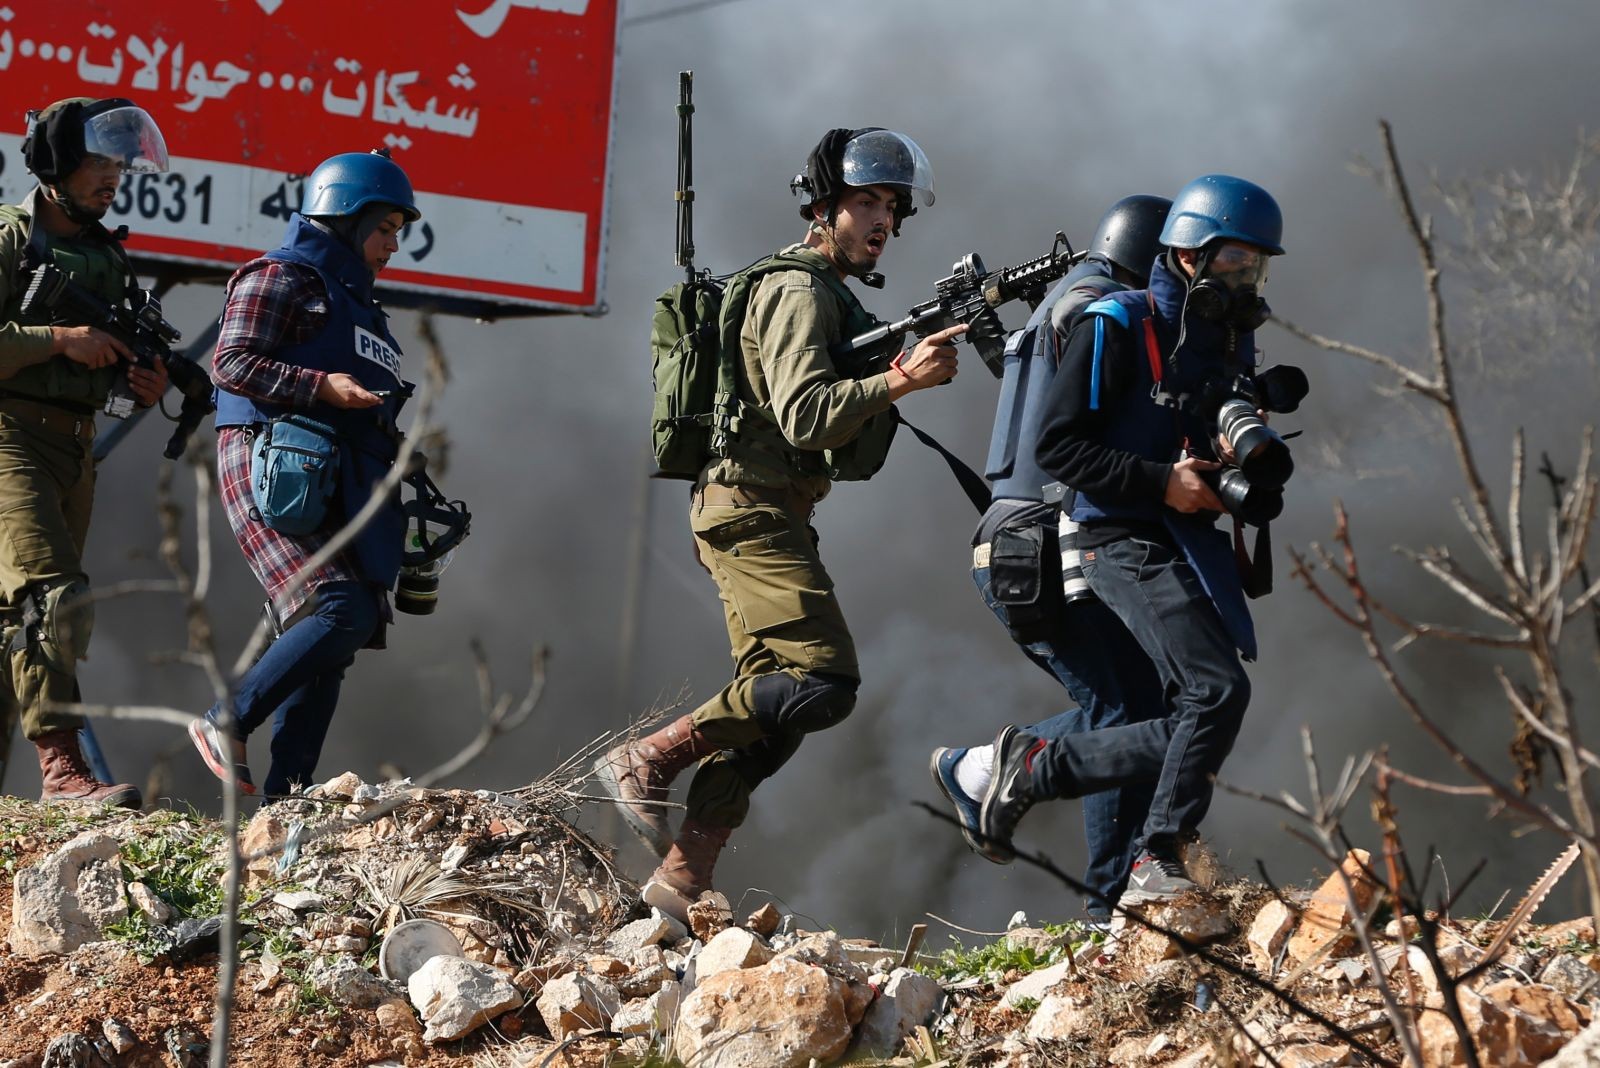 Violations against Media Freedoms in Palestine